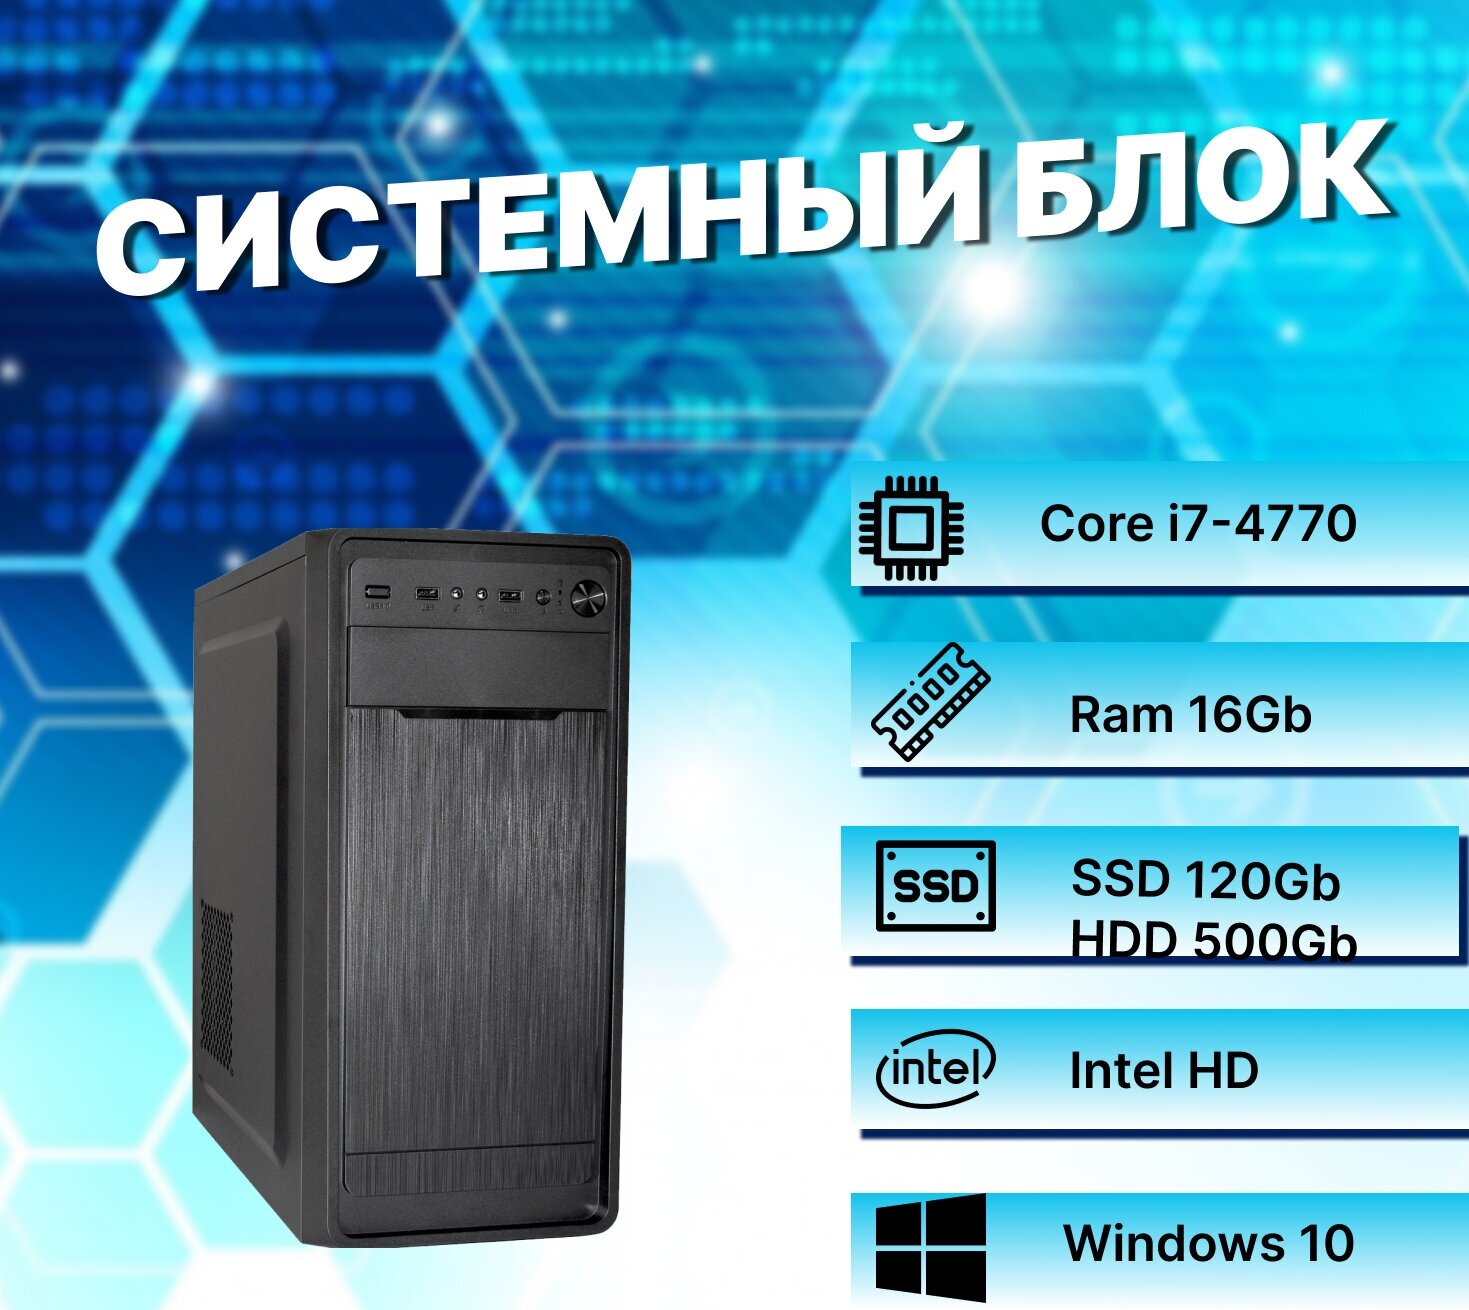 Системный блок Intel Core i7-4770 (3.4ГГц)/ RAM 16Gb/ SSD 120Gb/ HDD 500Gb/ Intel HD/ Windows 10 Pro